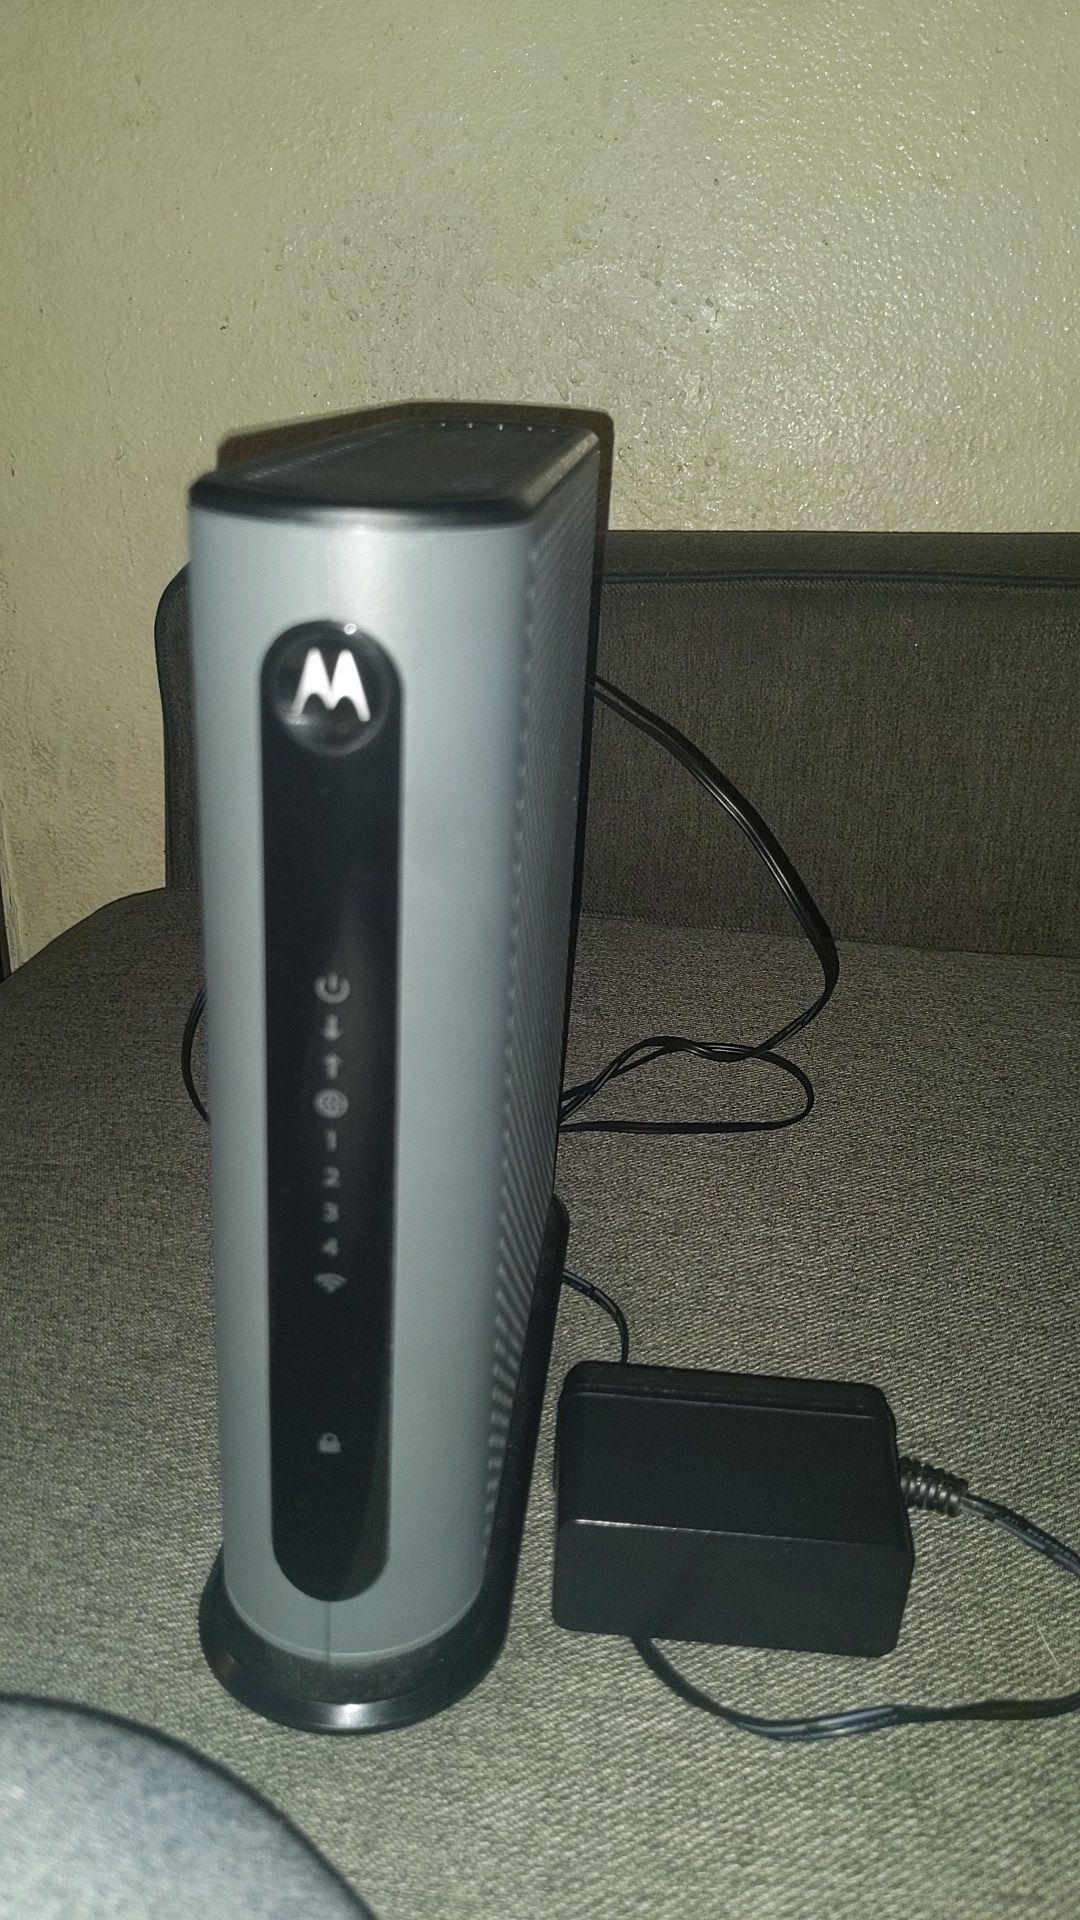 Motorola modem plus n450 router MG7315